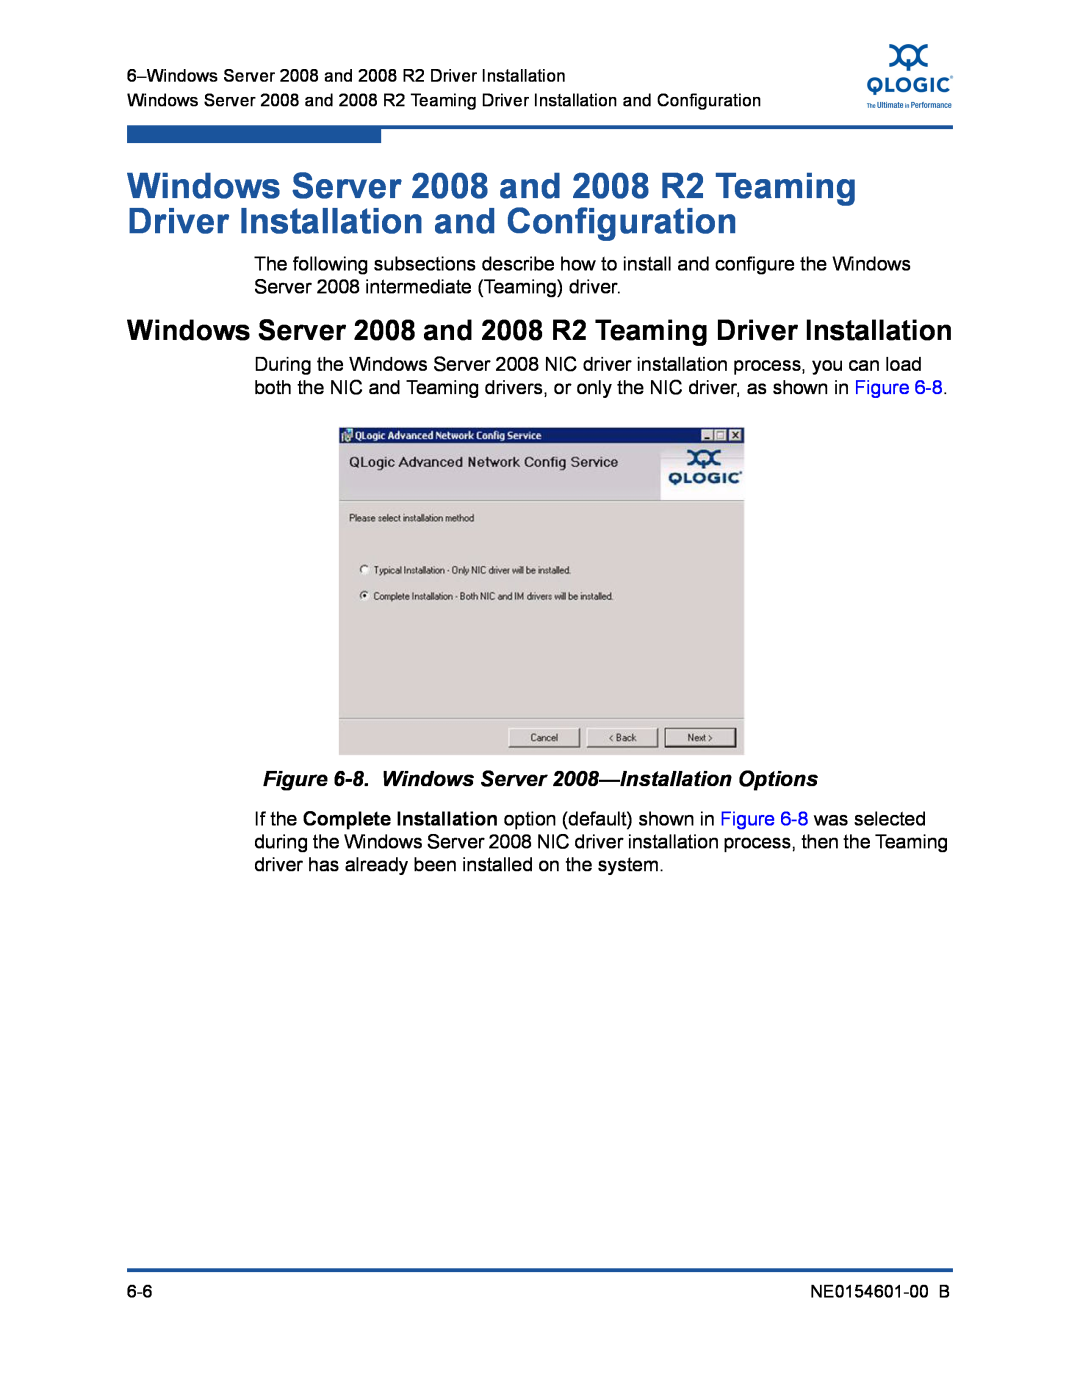 Q-Logic 3100 Windows Server 2008 and 2008 R2 Teaming Driver Installation, 8. Windows Server 2008-Installation Options 